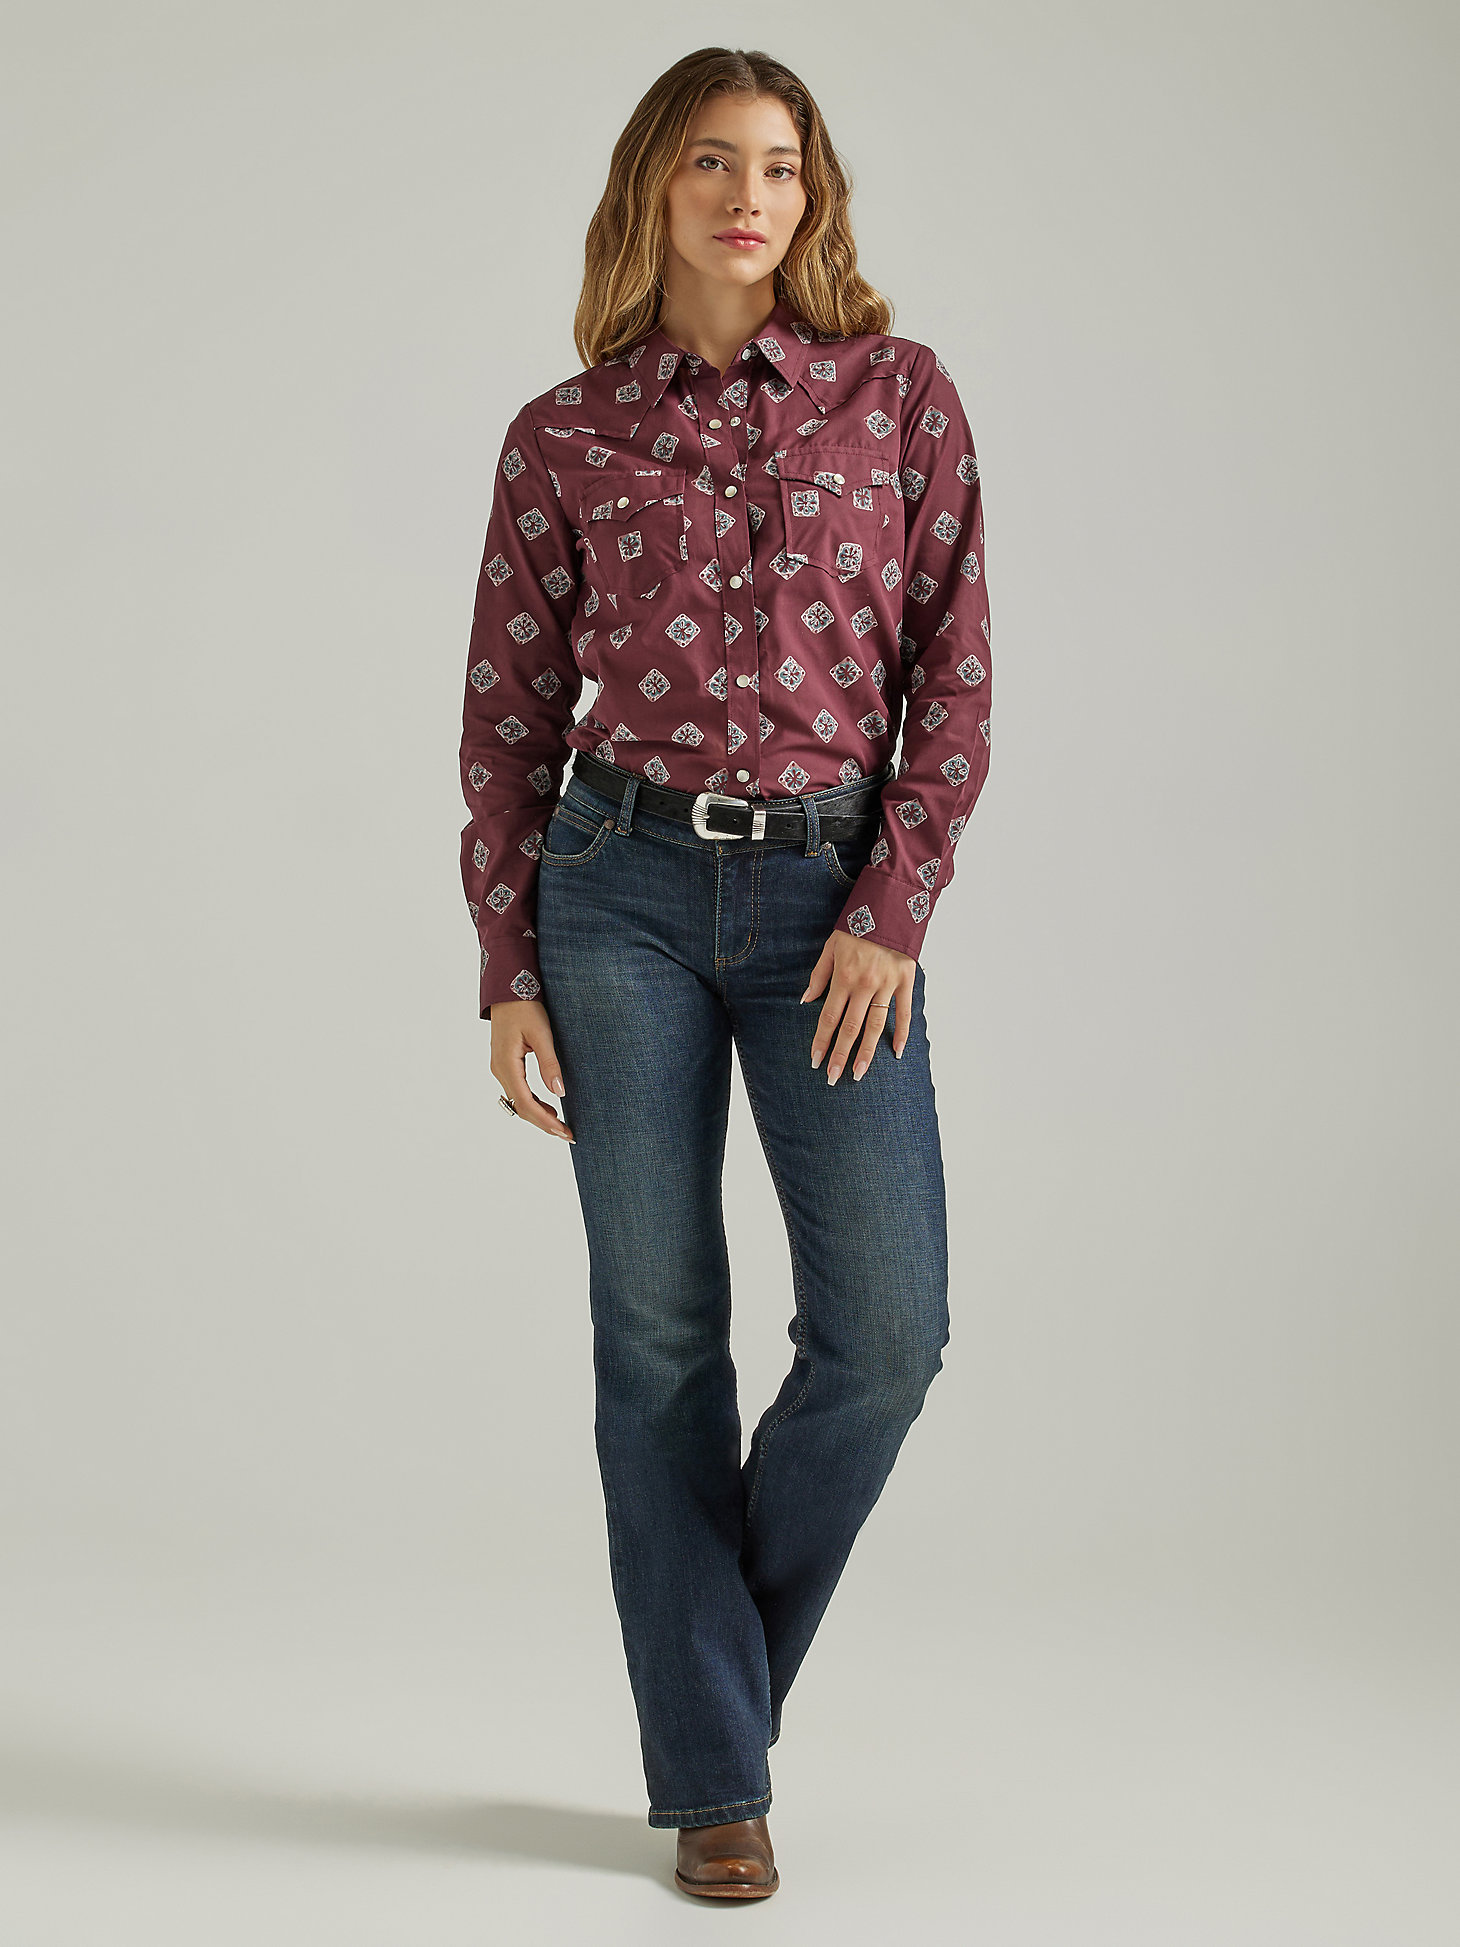 Women's Essential Long Sleeve Print Western Snap Shirt in Port Royale alternative view 1